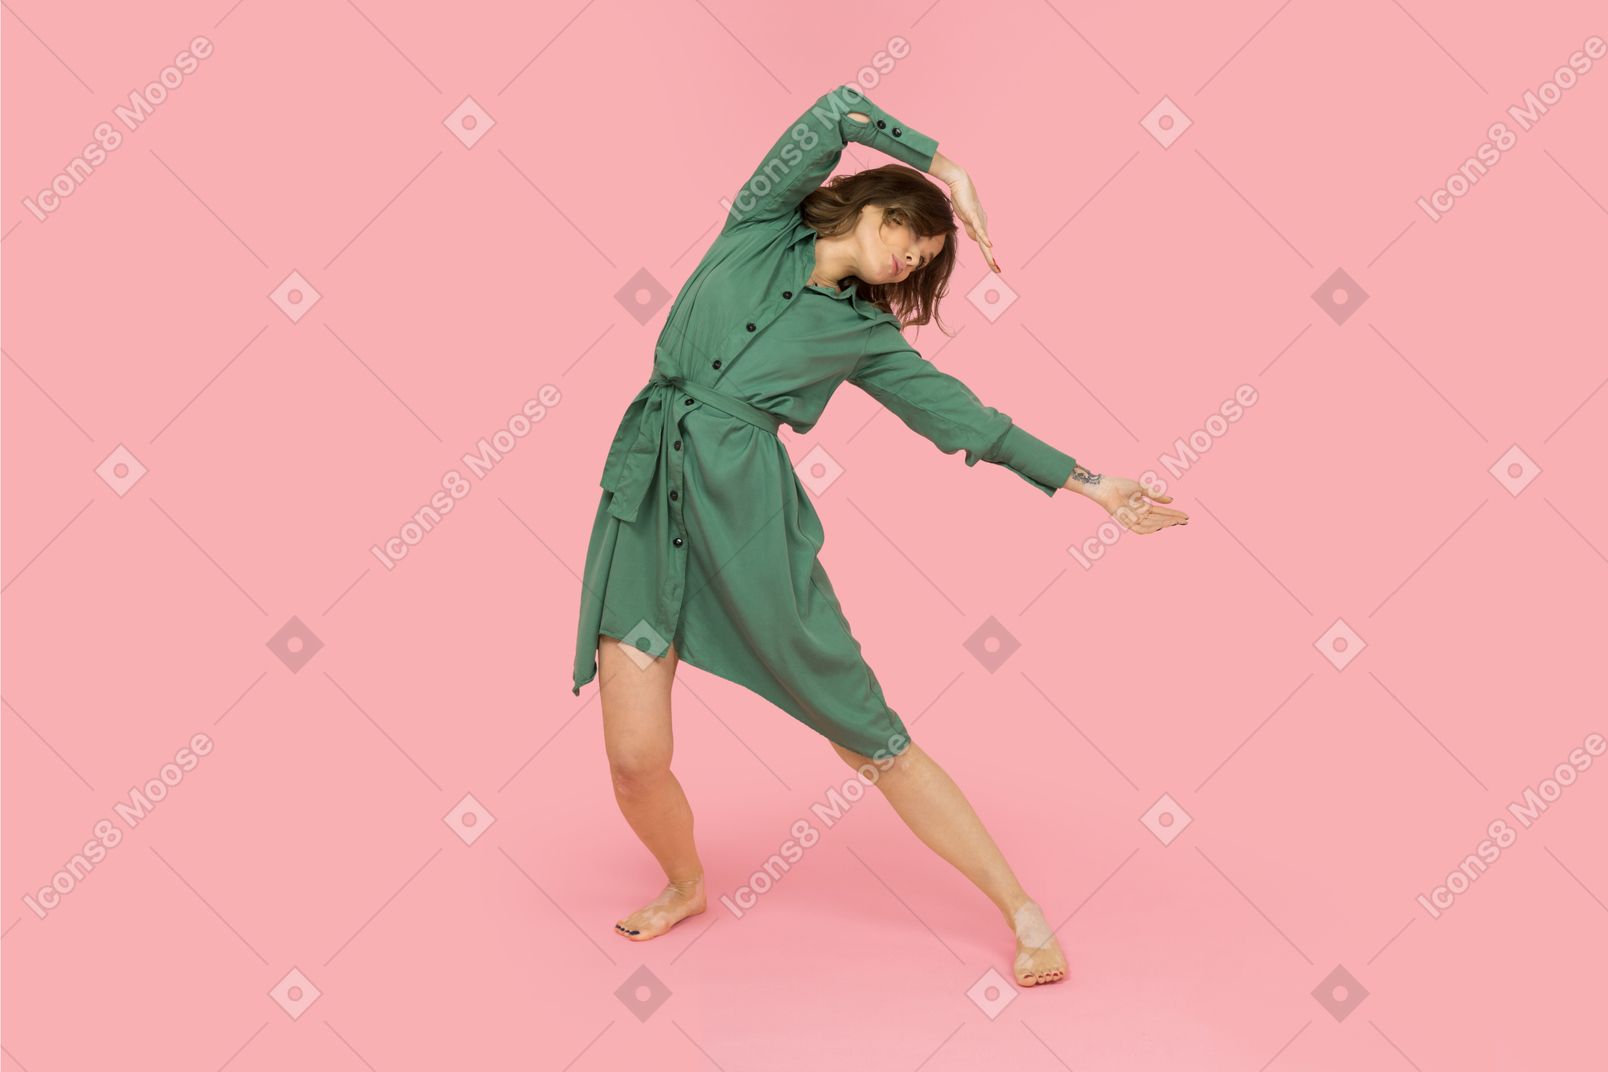 Female in green dress dancing alone